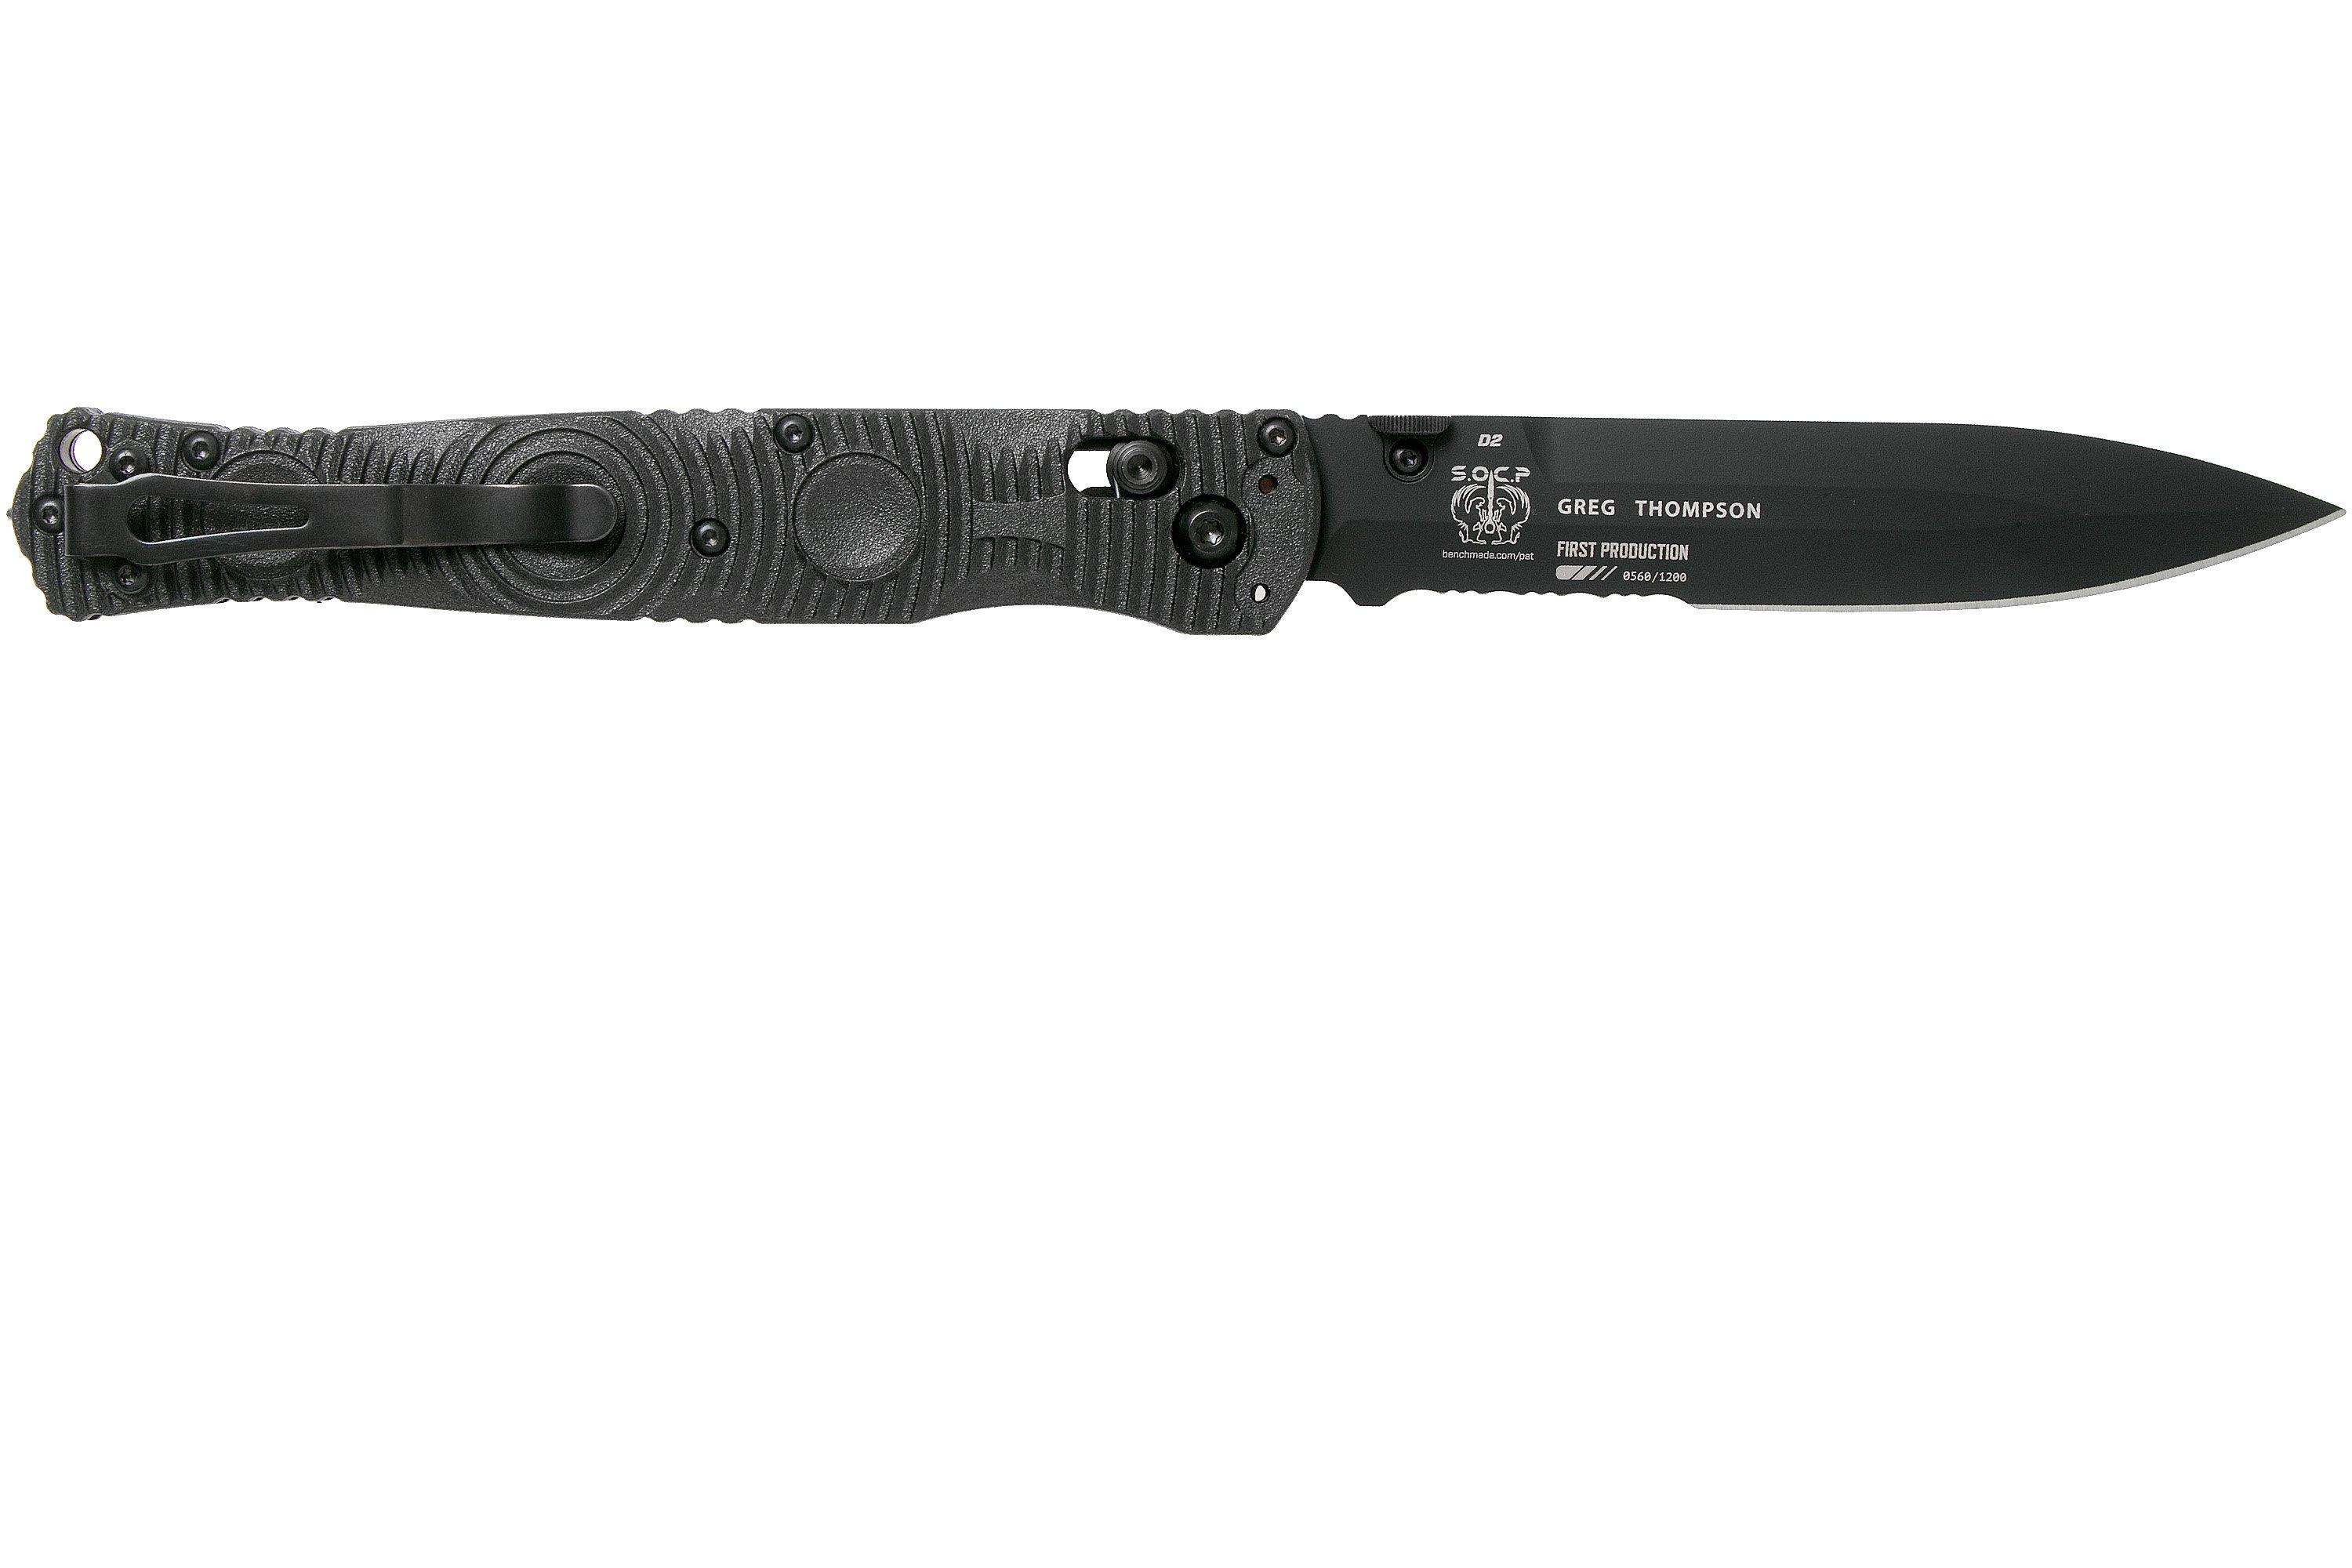 Benchmade SOCP 4.5 391SBK Serrated pocket knife, Greg Thompson 